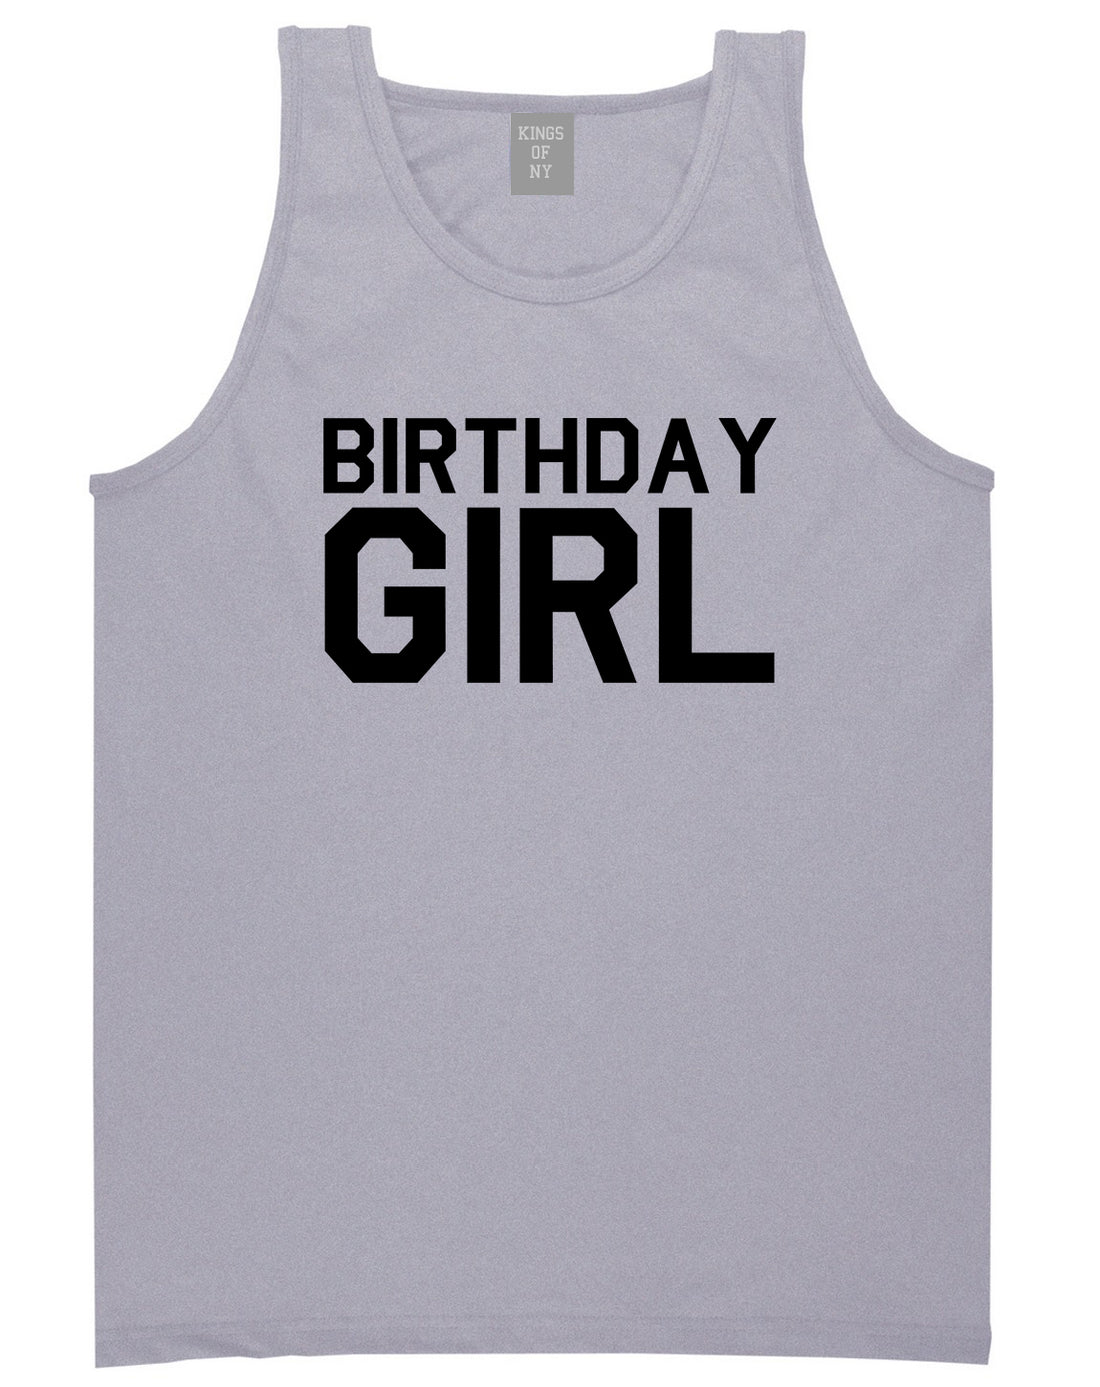 Birthday Girl Grey Tank Top Shirt by Kings Of NY